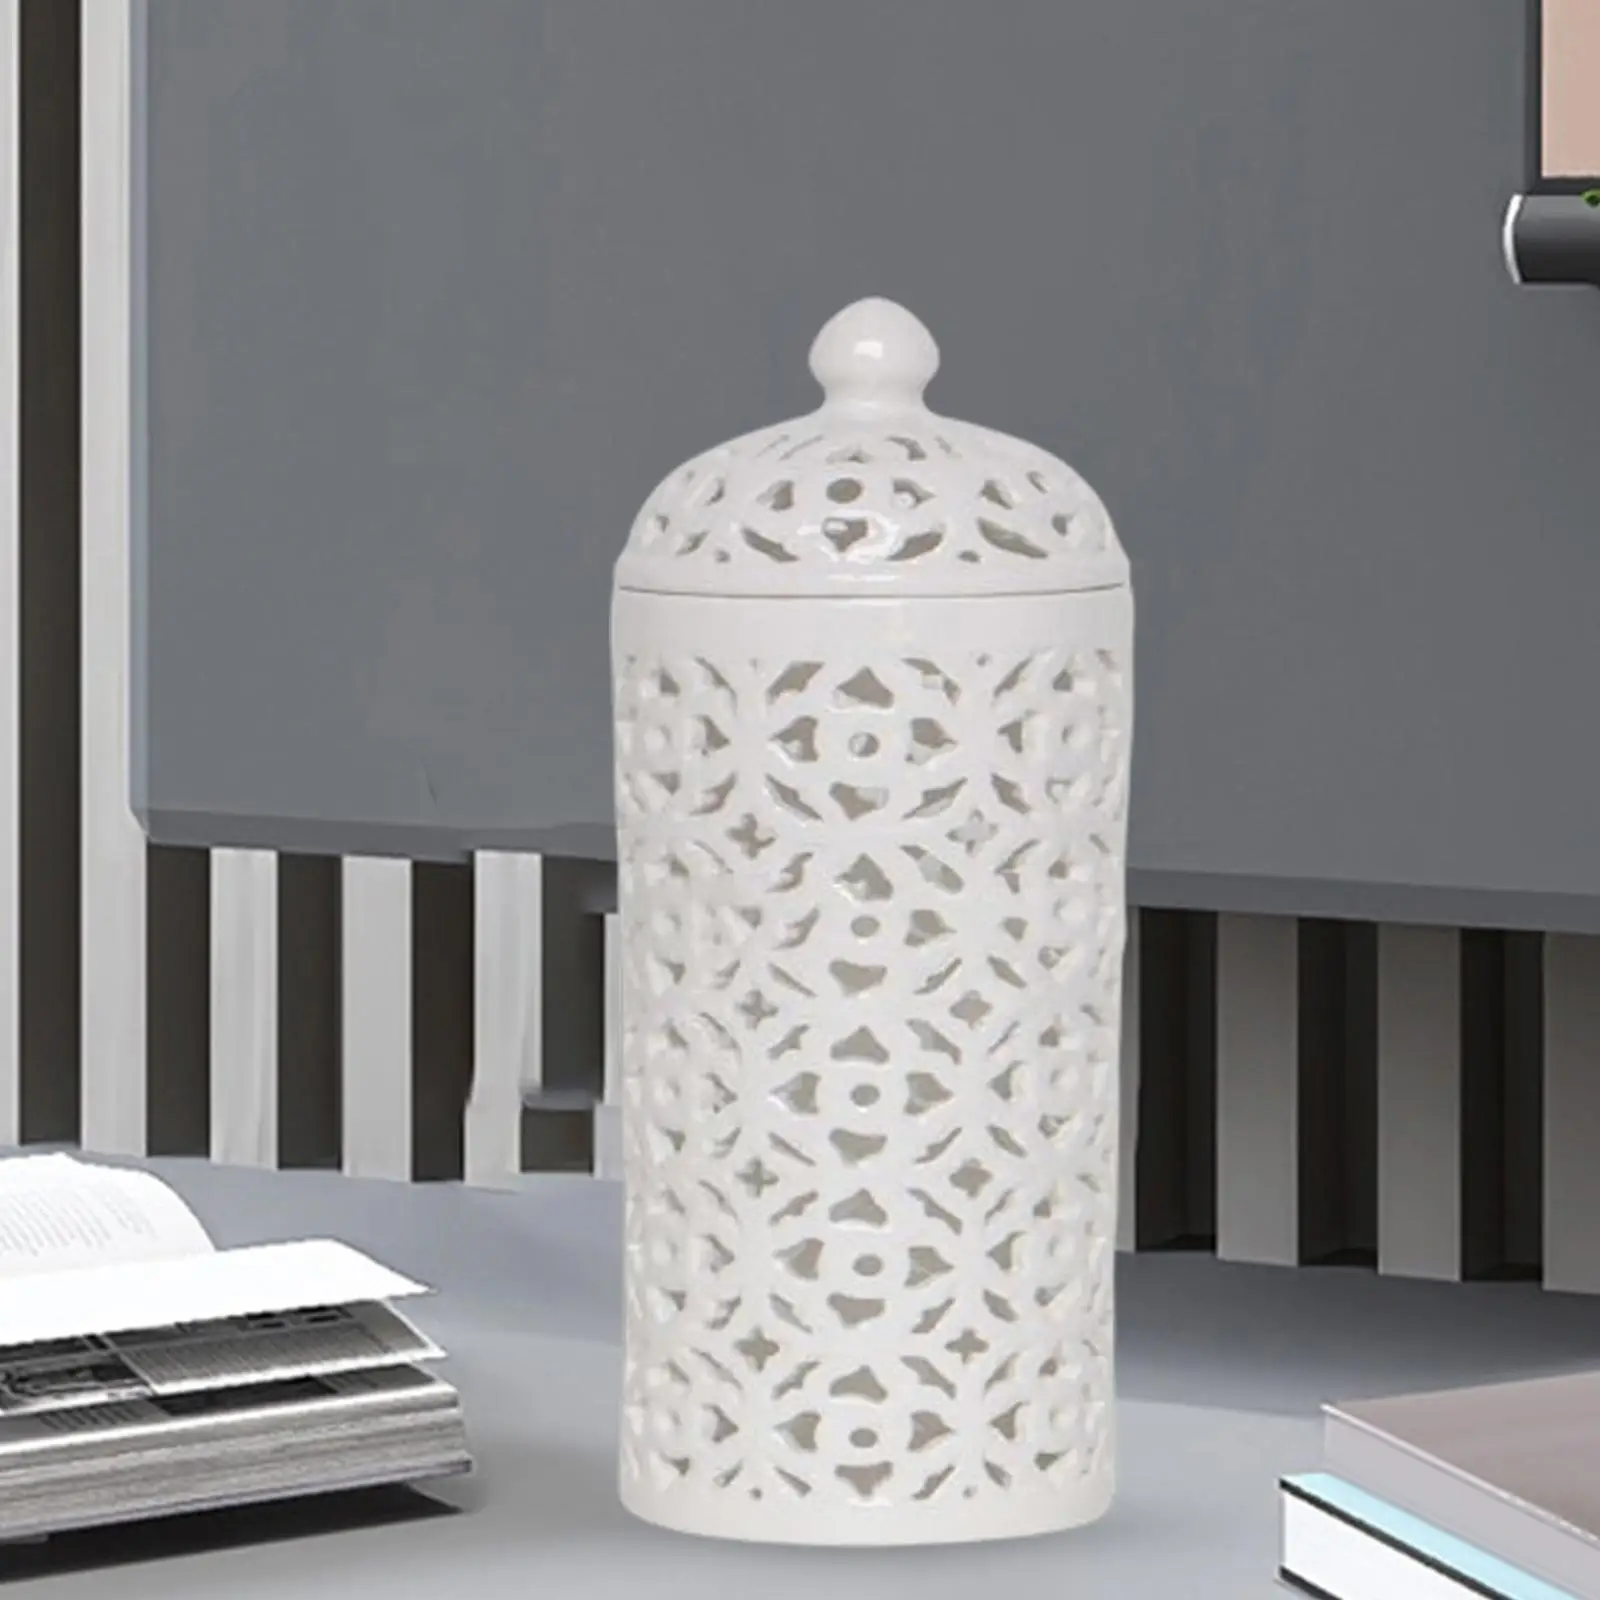 Ceramic Hollow Pierced Vase with Lid Temple Jar, Flower Holder Kitchen Decor